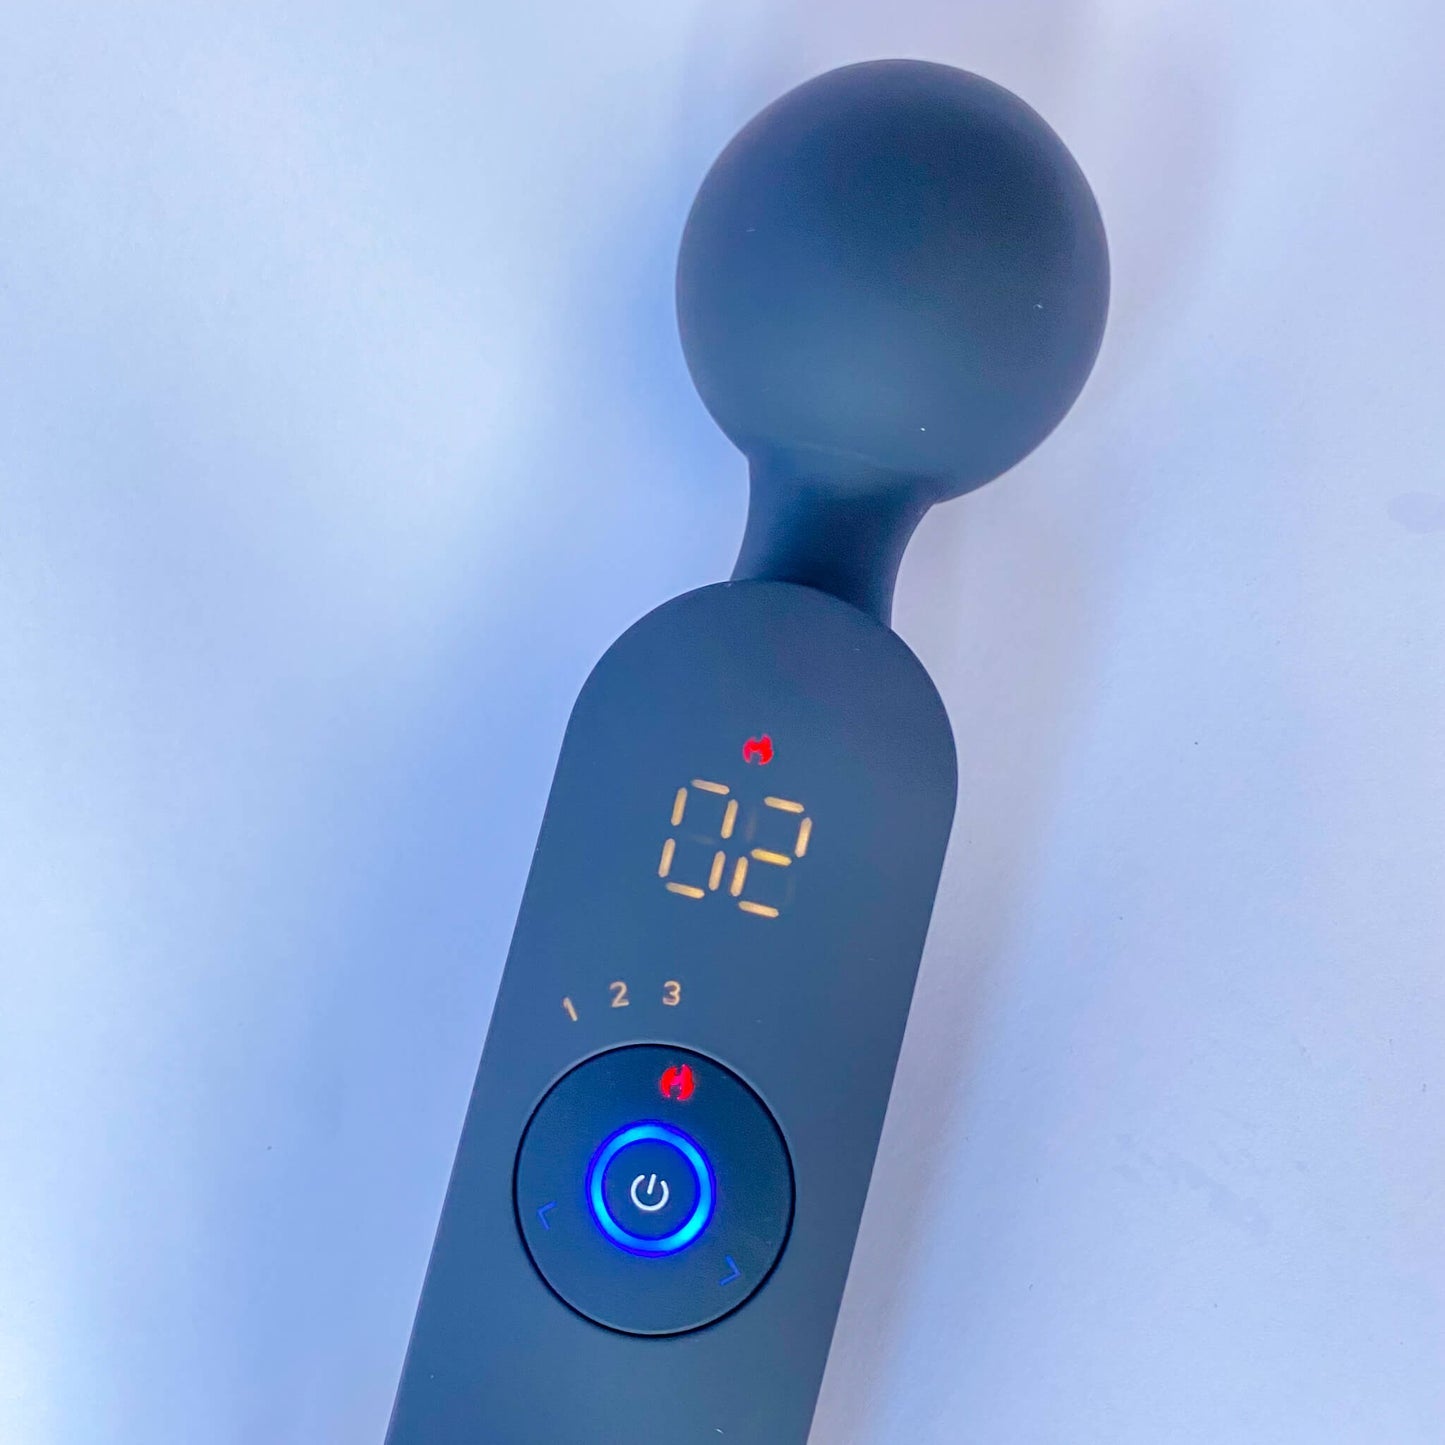 12 Speed Heated Magic Wand Vibrator with Digital Display